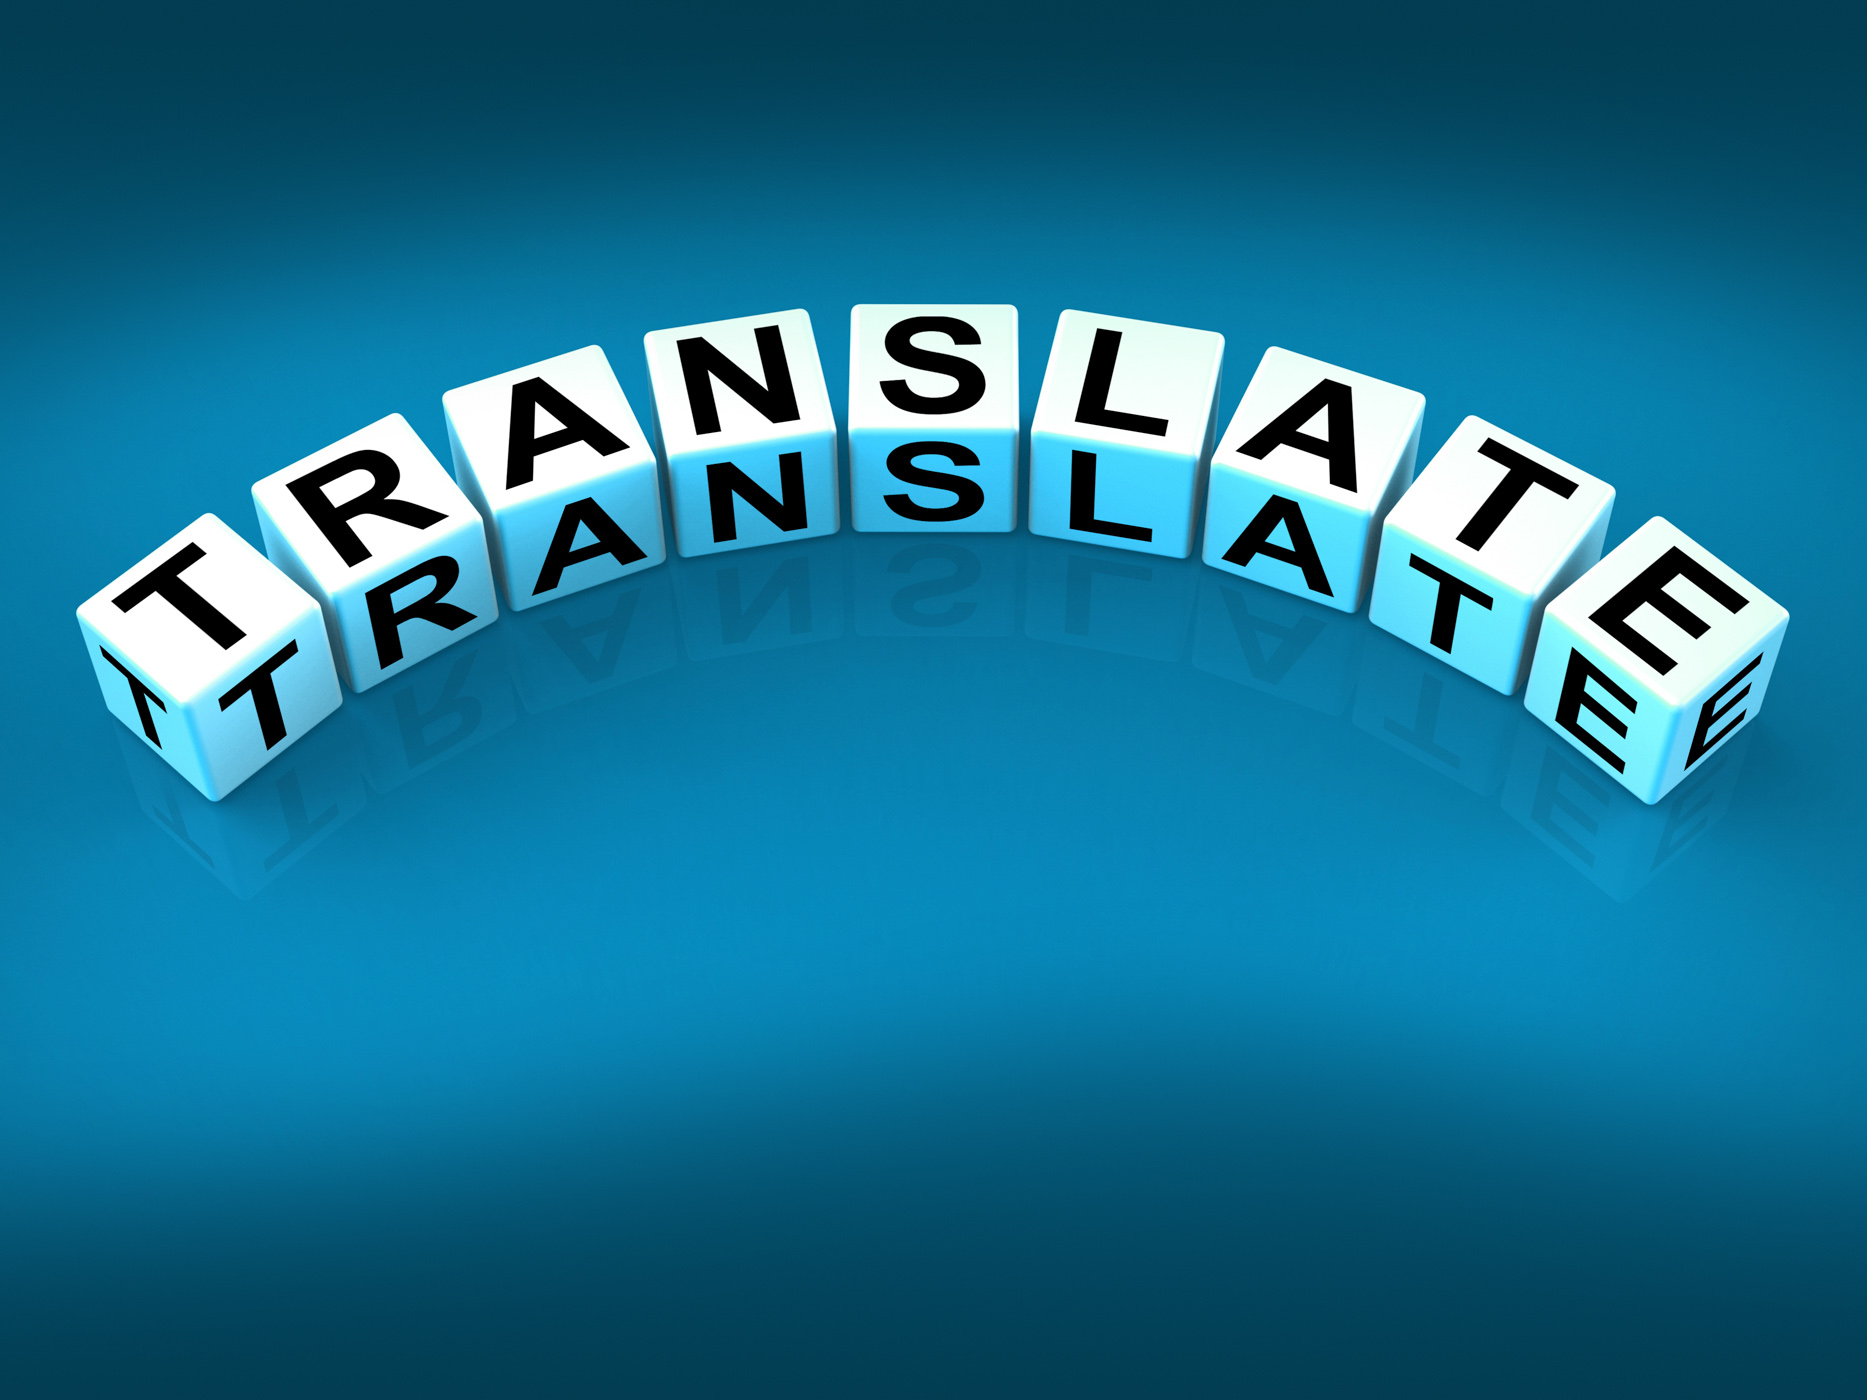 Translate blocks show multilingual or international translator photo